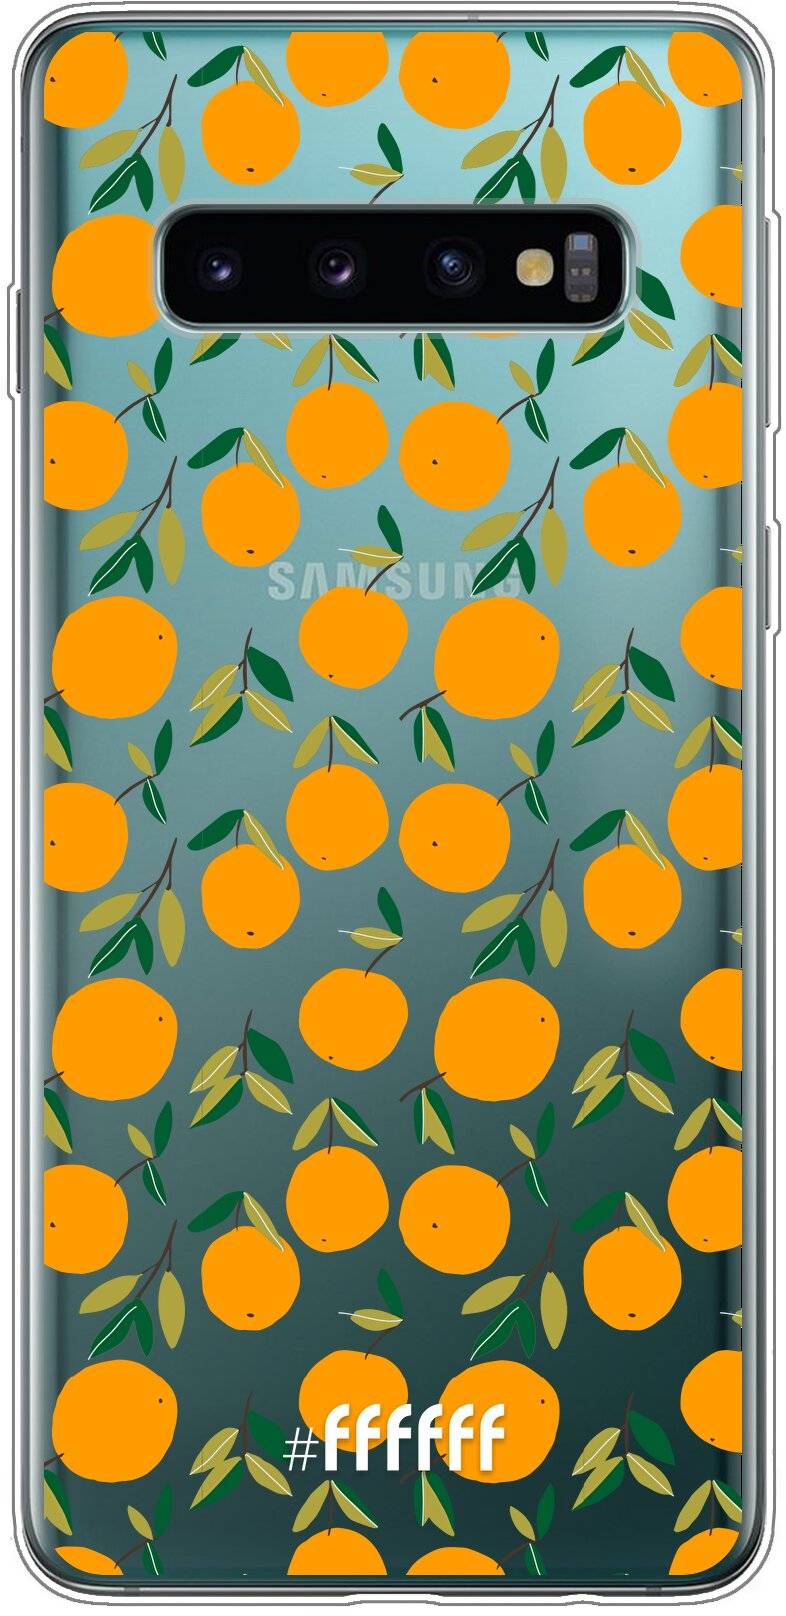 Oranges Galaxy S10